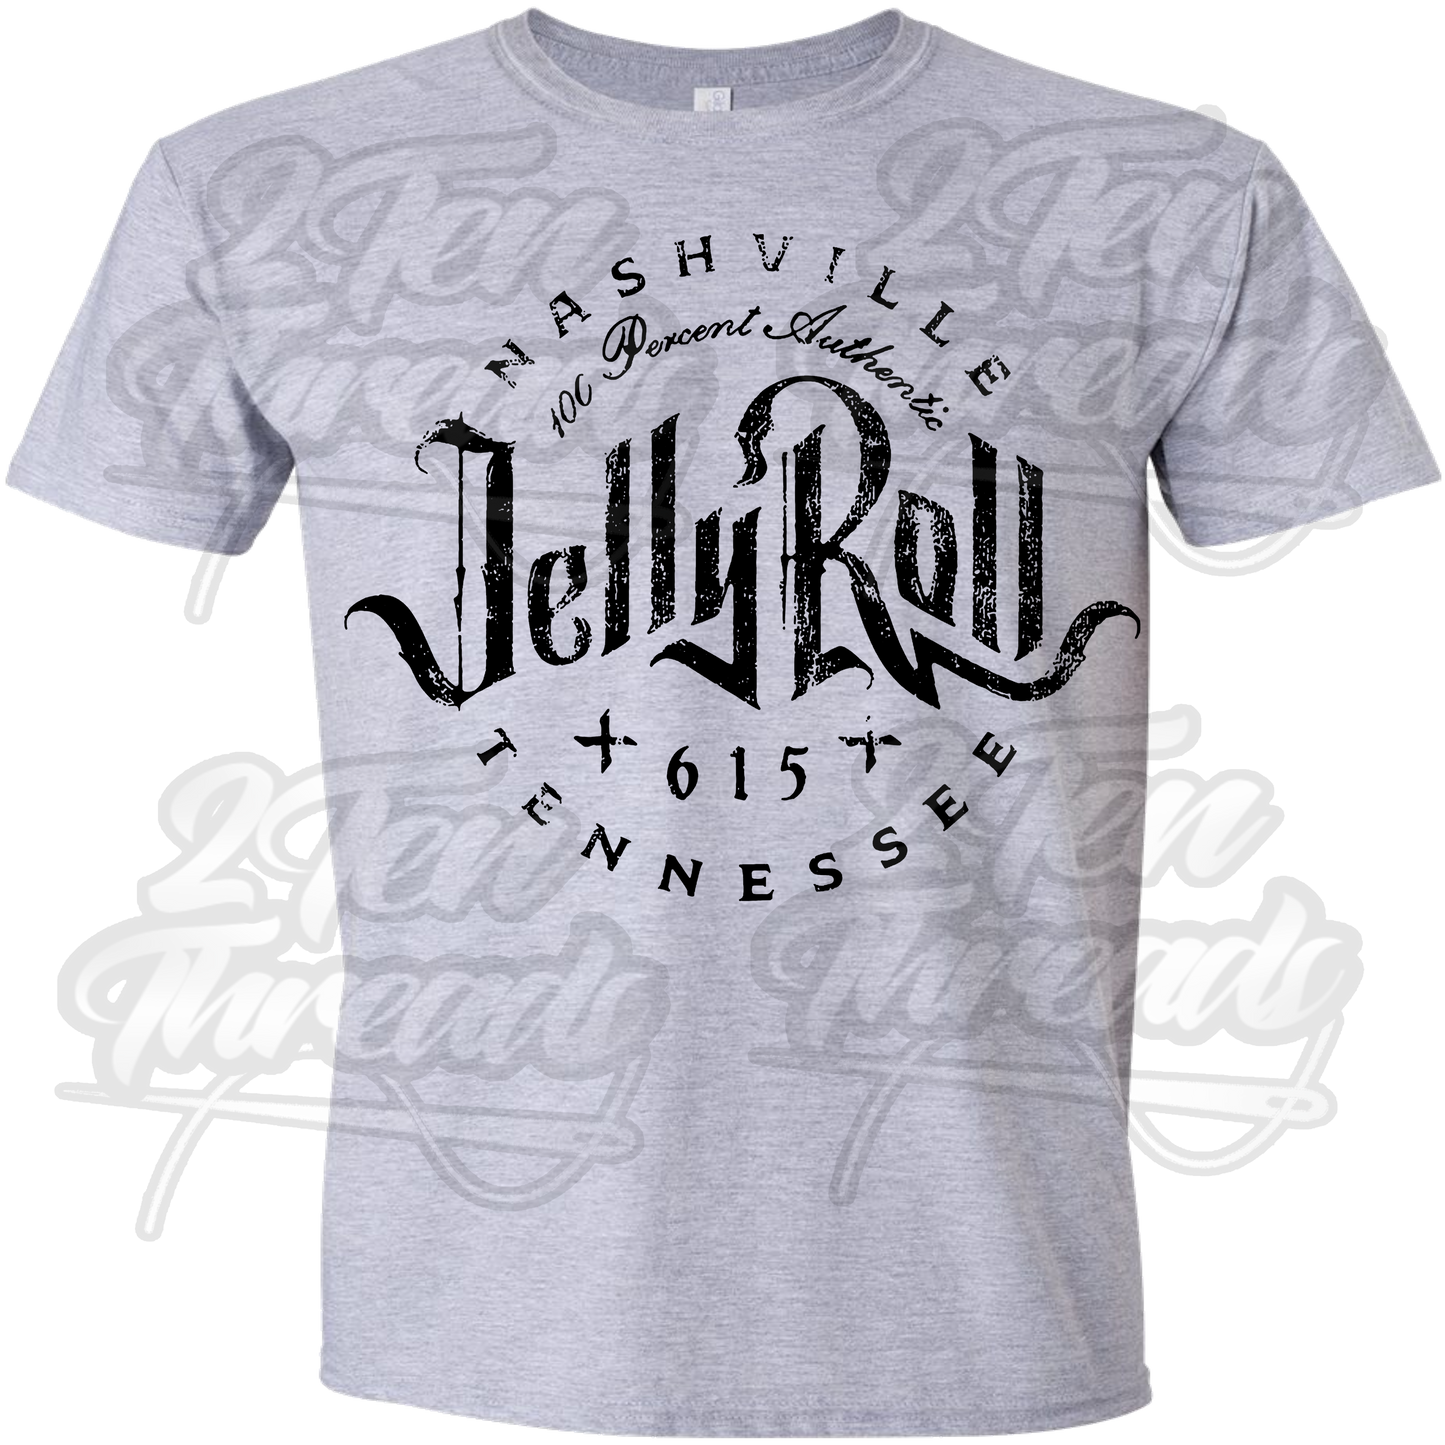 Nashville Jelly Roll shirt